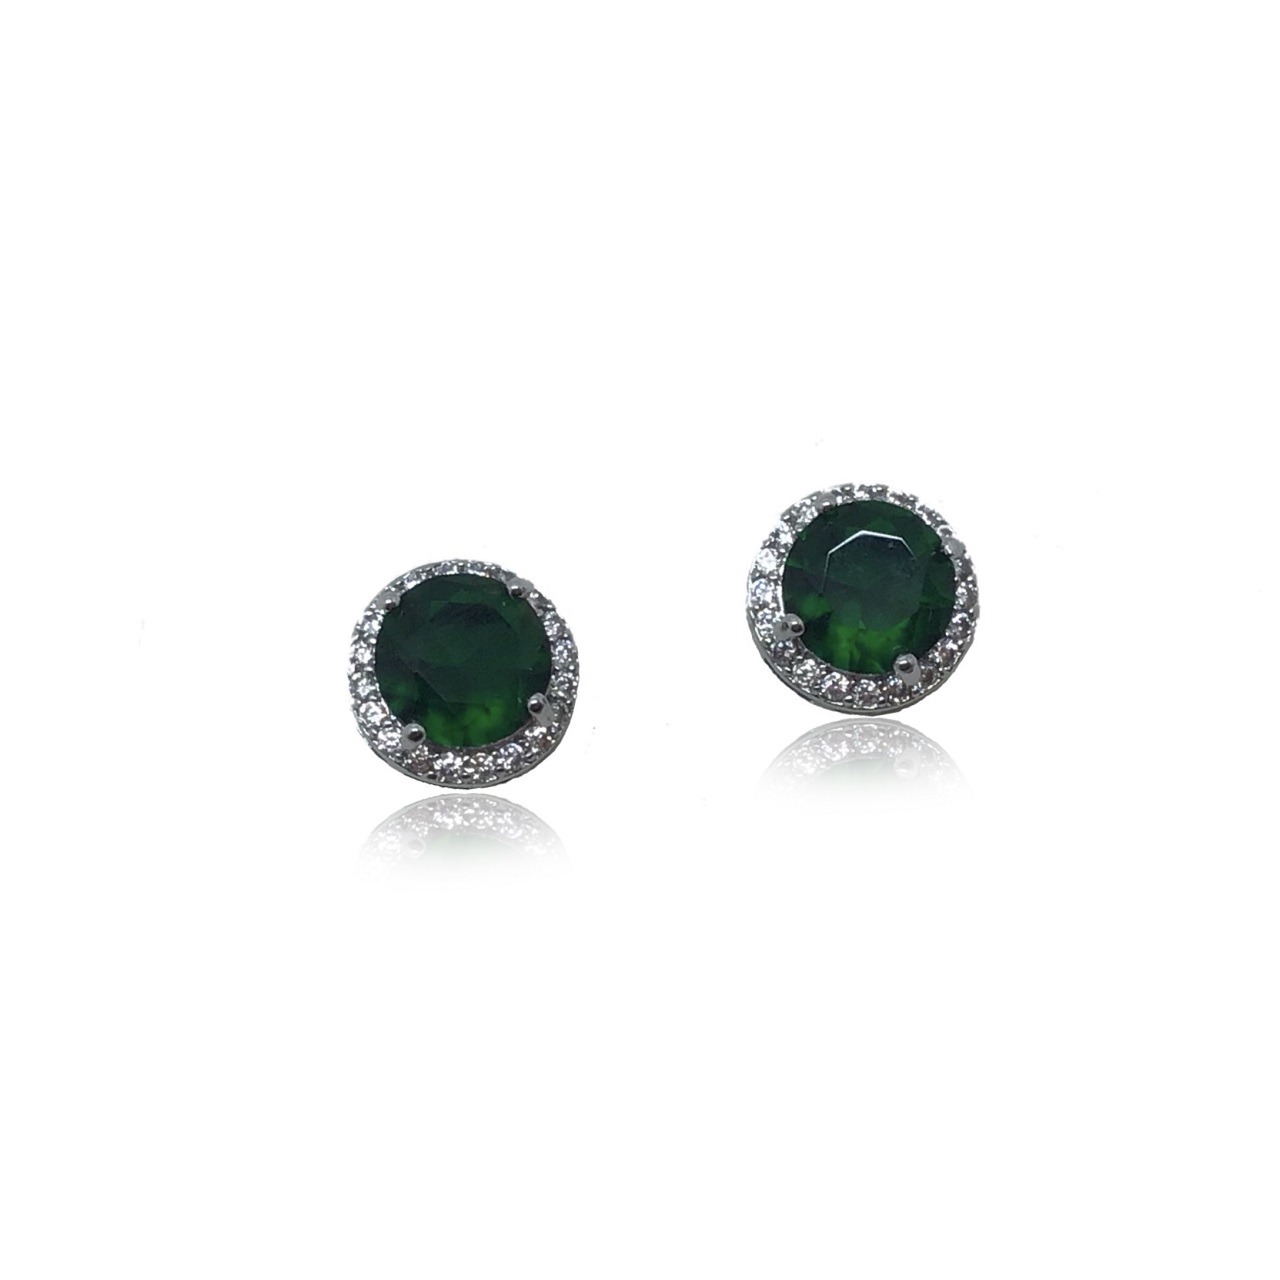 Emerald Classic Stud Earring|Aleah|Jeanette Maree|Shop Online Now